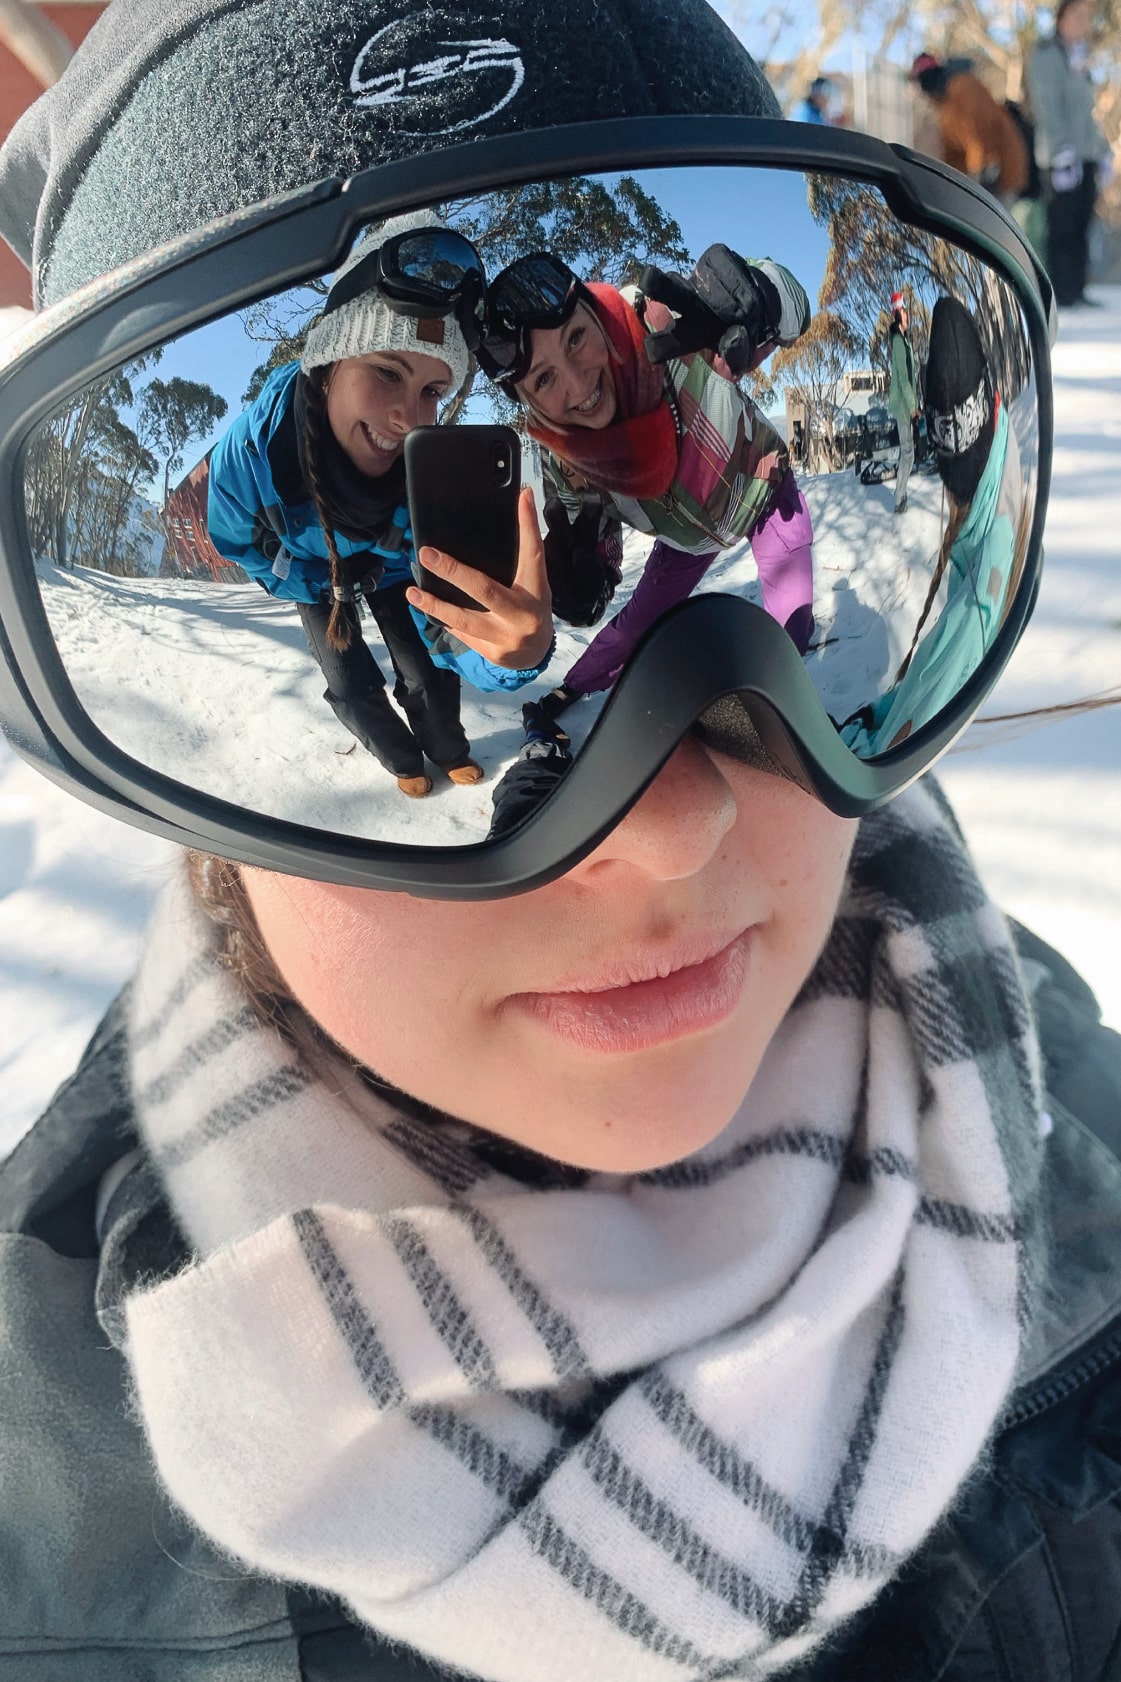 Senior students at the annual ski trip